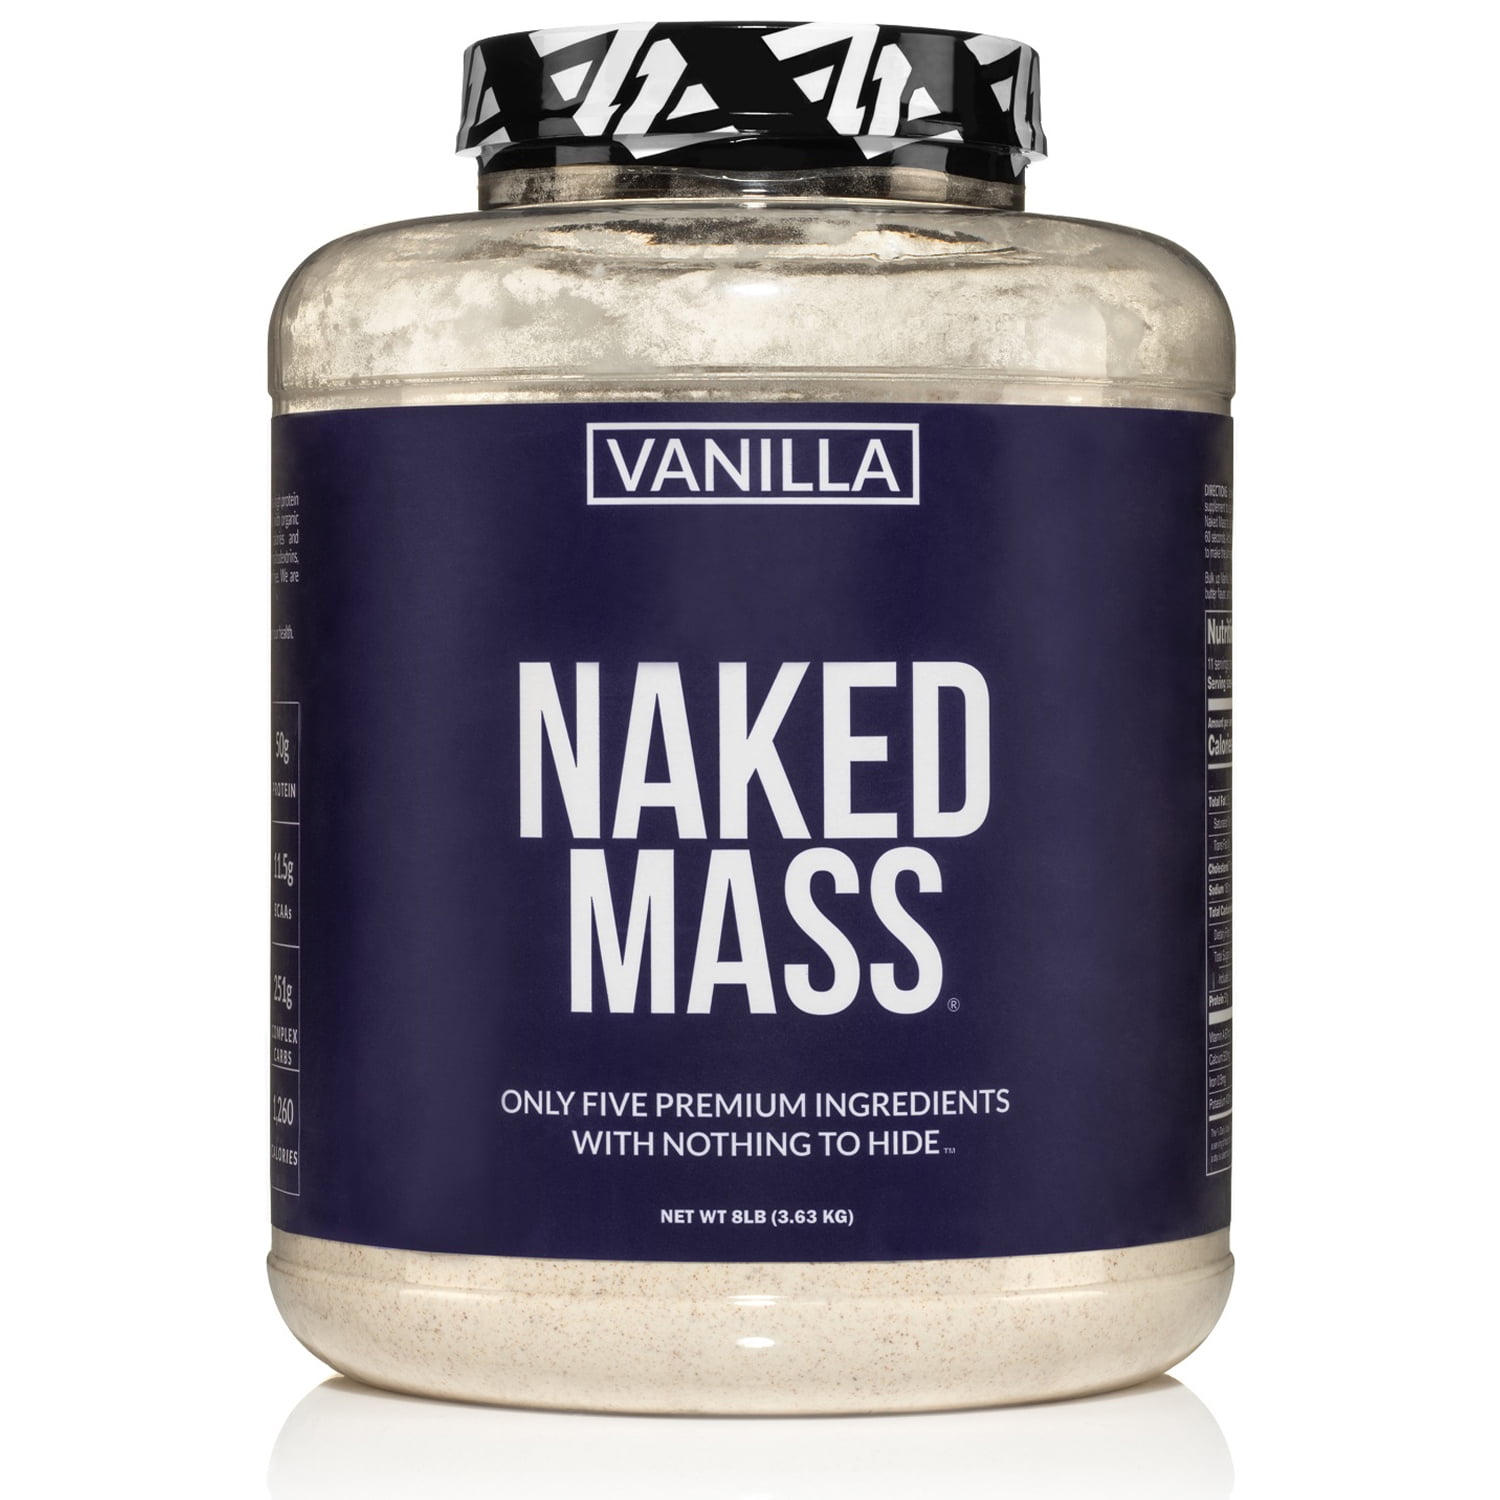 Naked Vegan Mass - Natural Vegan Weight Gainer Protein Powder - 8lb Bulk,  GMO Free, Gluten Free, Soy Free & Dairy Free. No Artificial Ingredients -  1,230 Calories - 11 Servings 